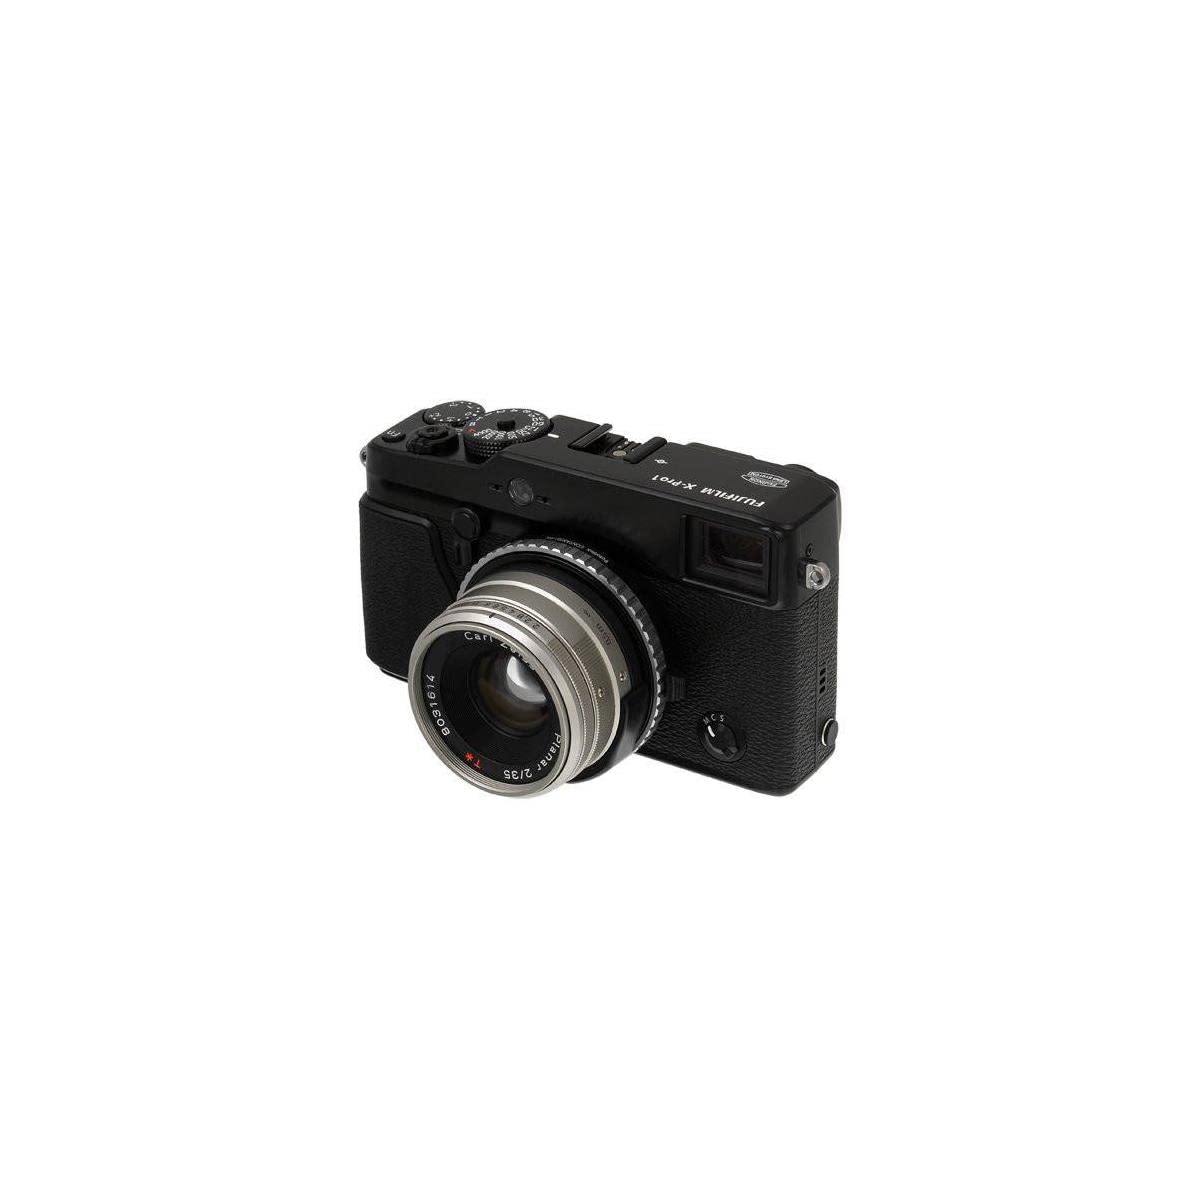 Fotodiox Lens Mount Adapter - Contax G SLR Lens to Fujifilm X-Series Mirrorless Camera Body